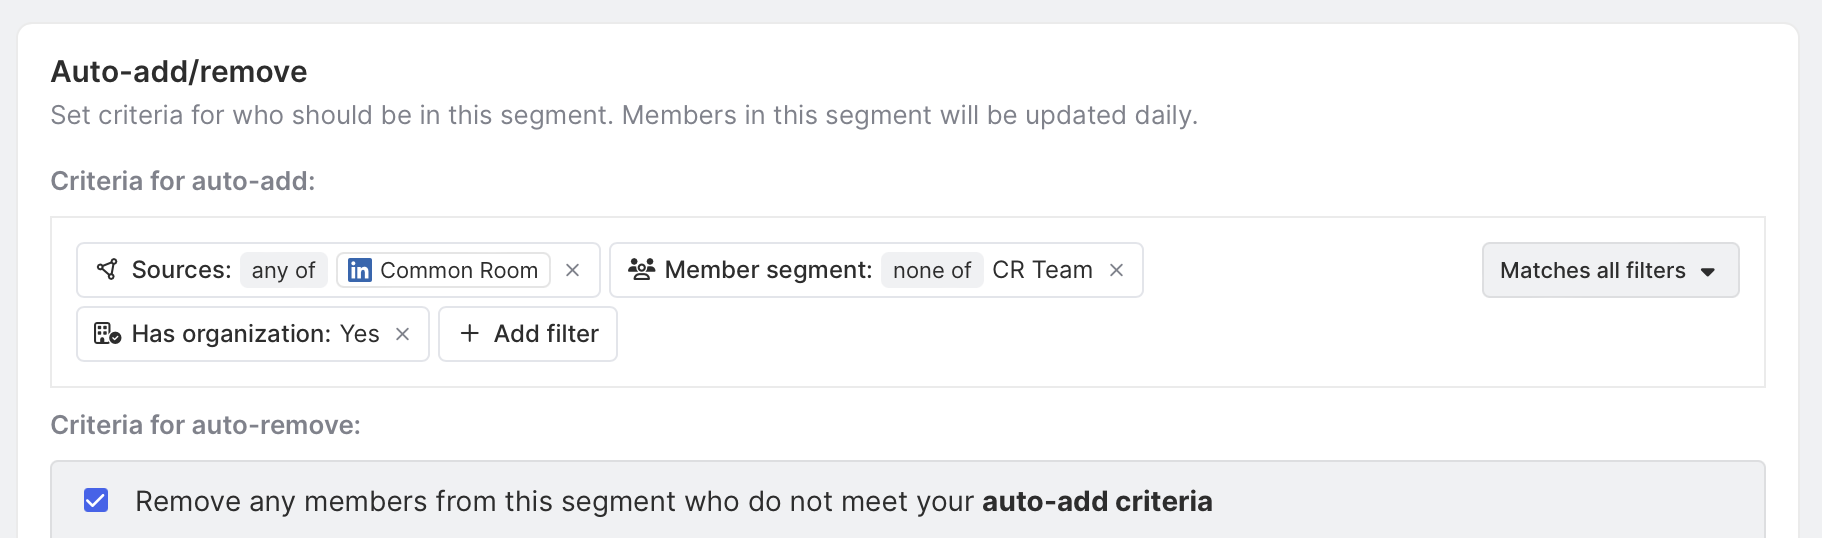 Set criteria to auto-add members